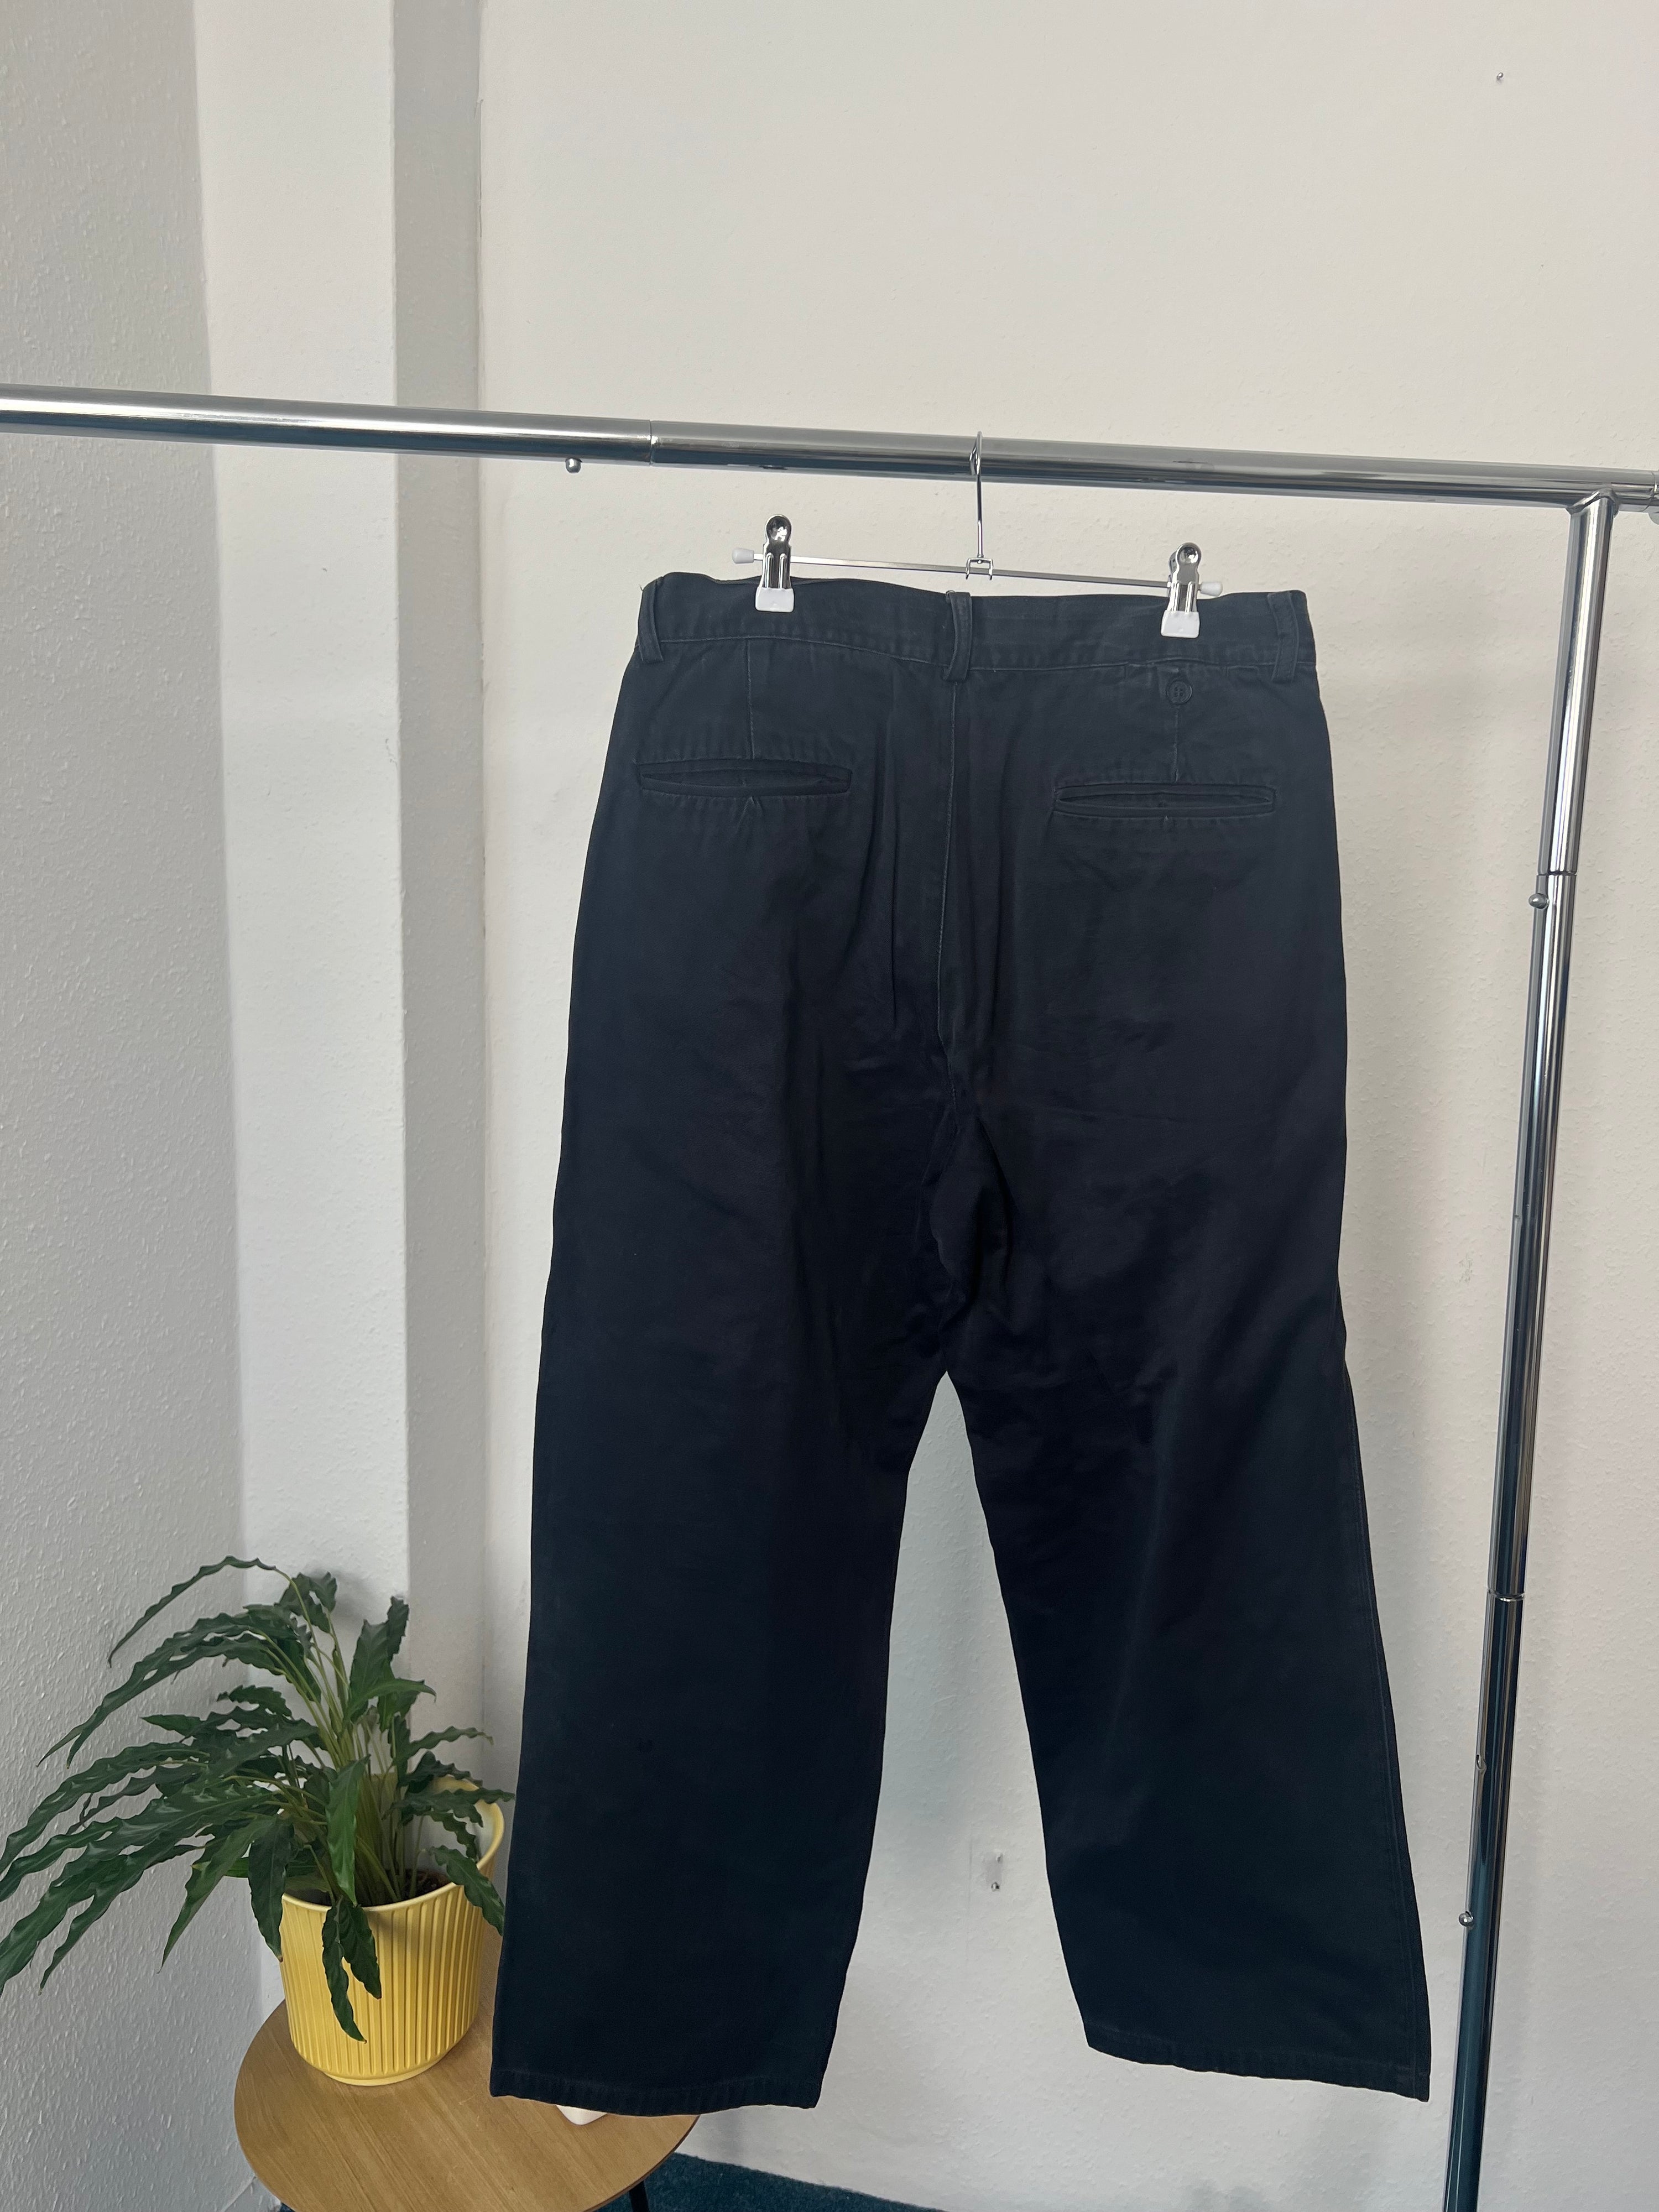 Vintage Trussardi Straight Cut Pants (M)